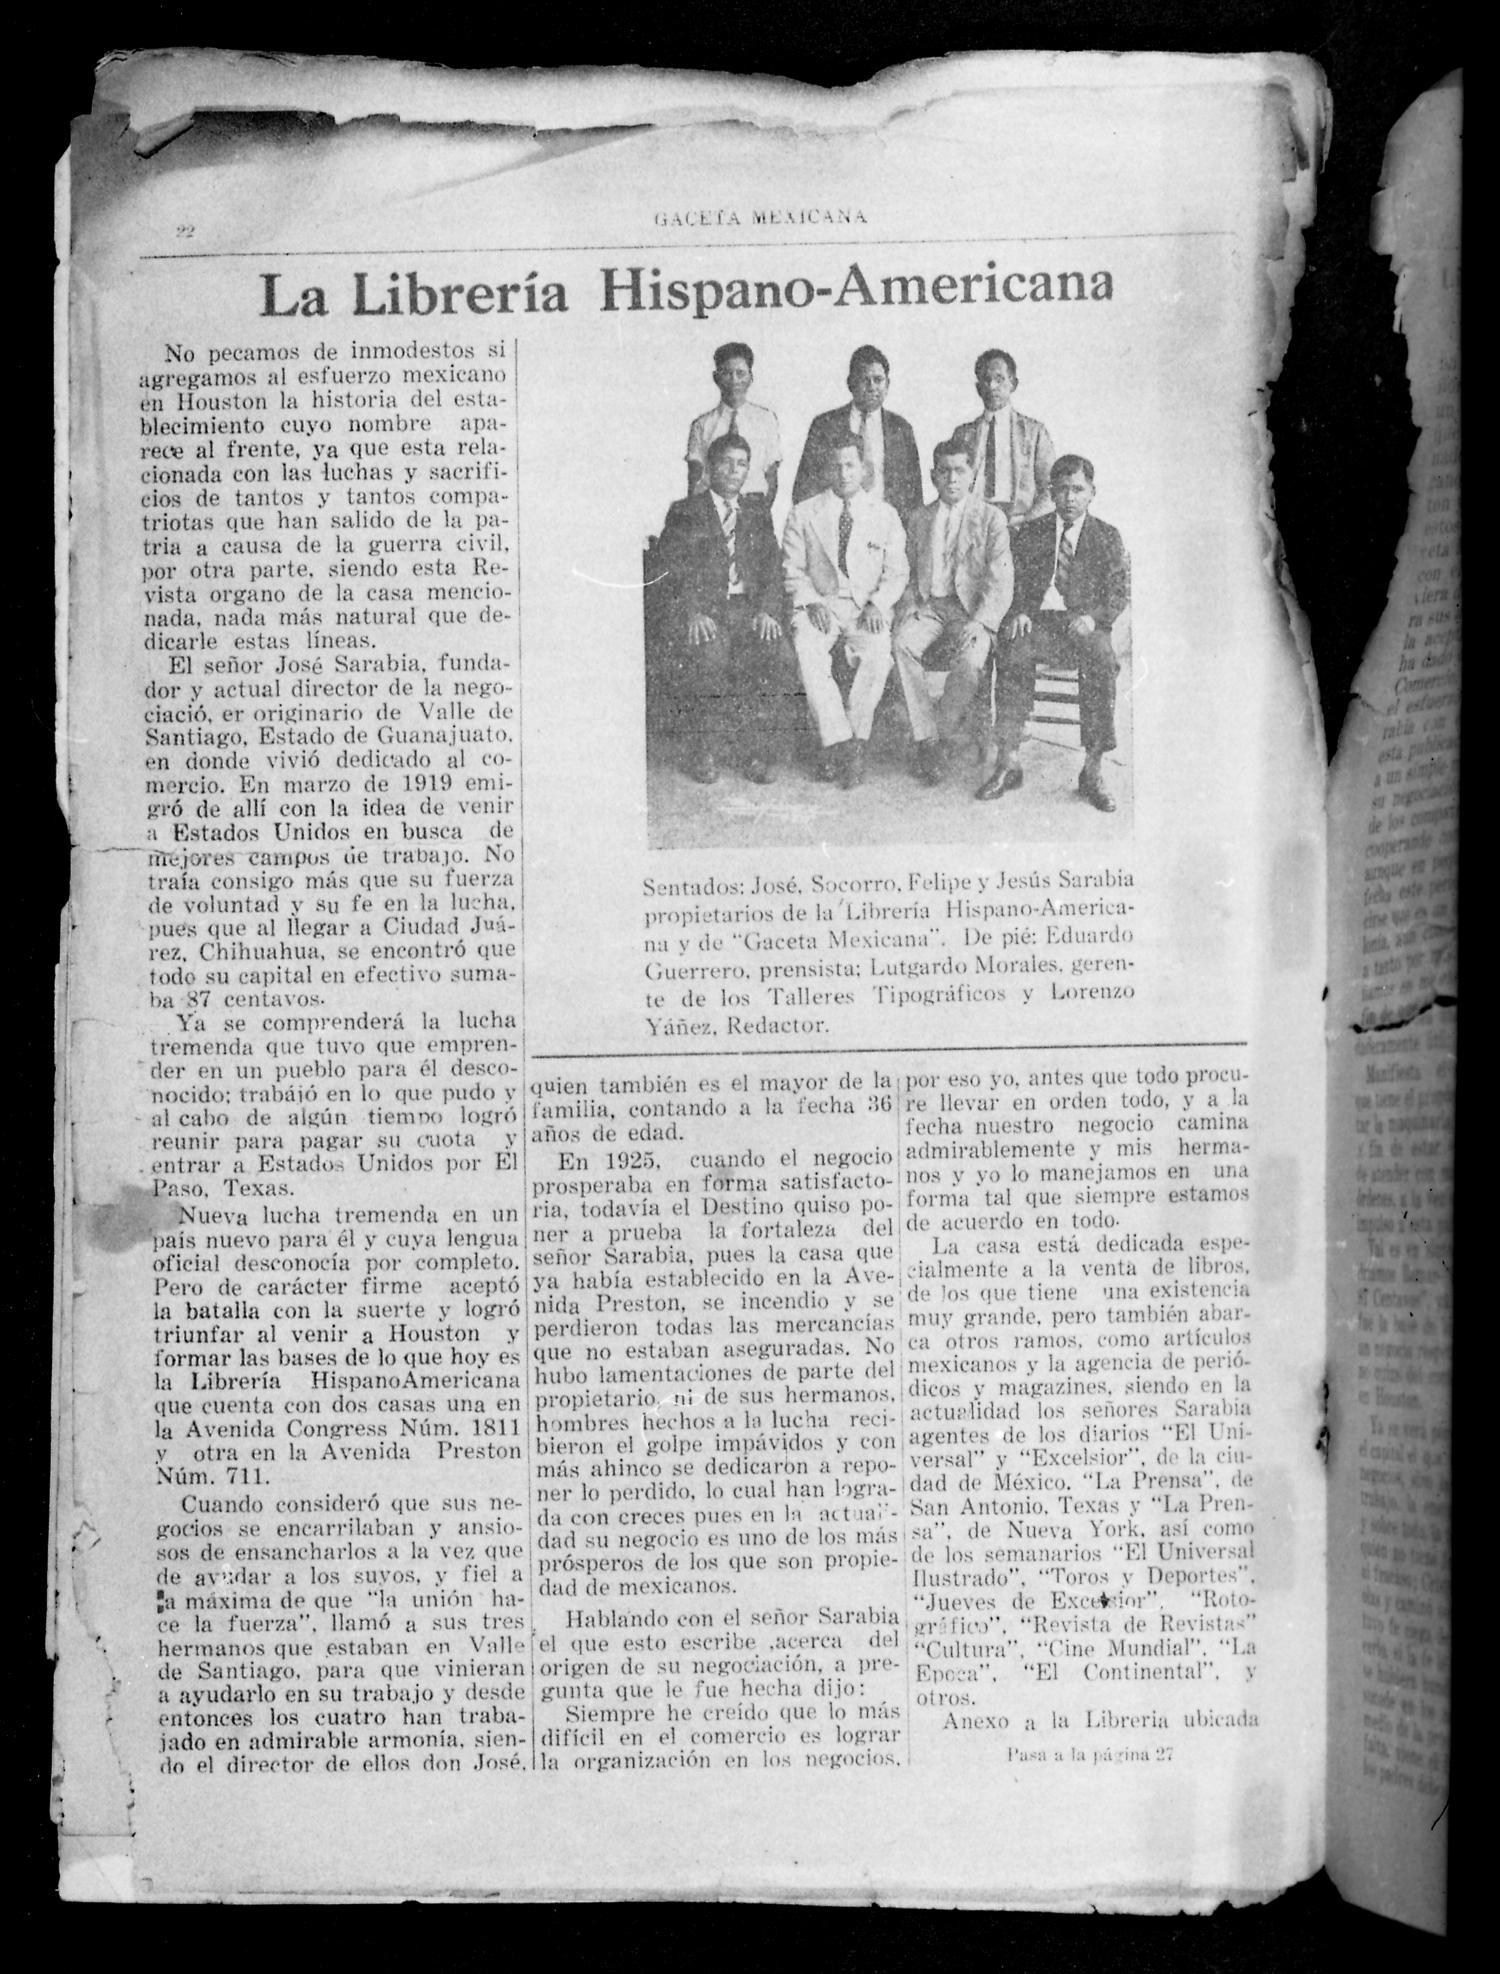 [Newspaper clipping of La Gaceta Mexicana cover page]
                                                
                                                    22
                                                